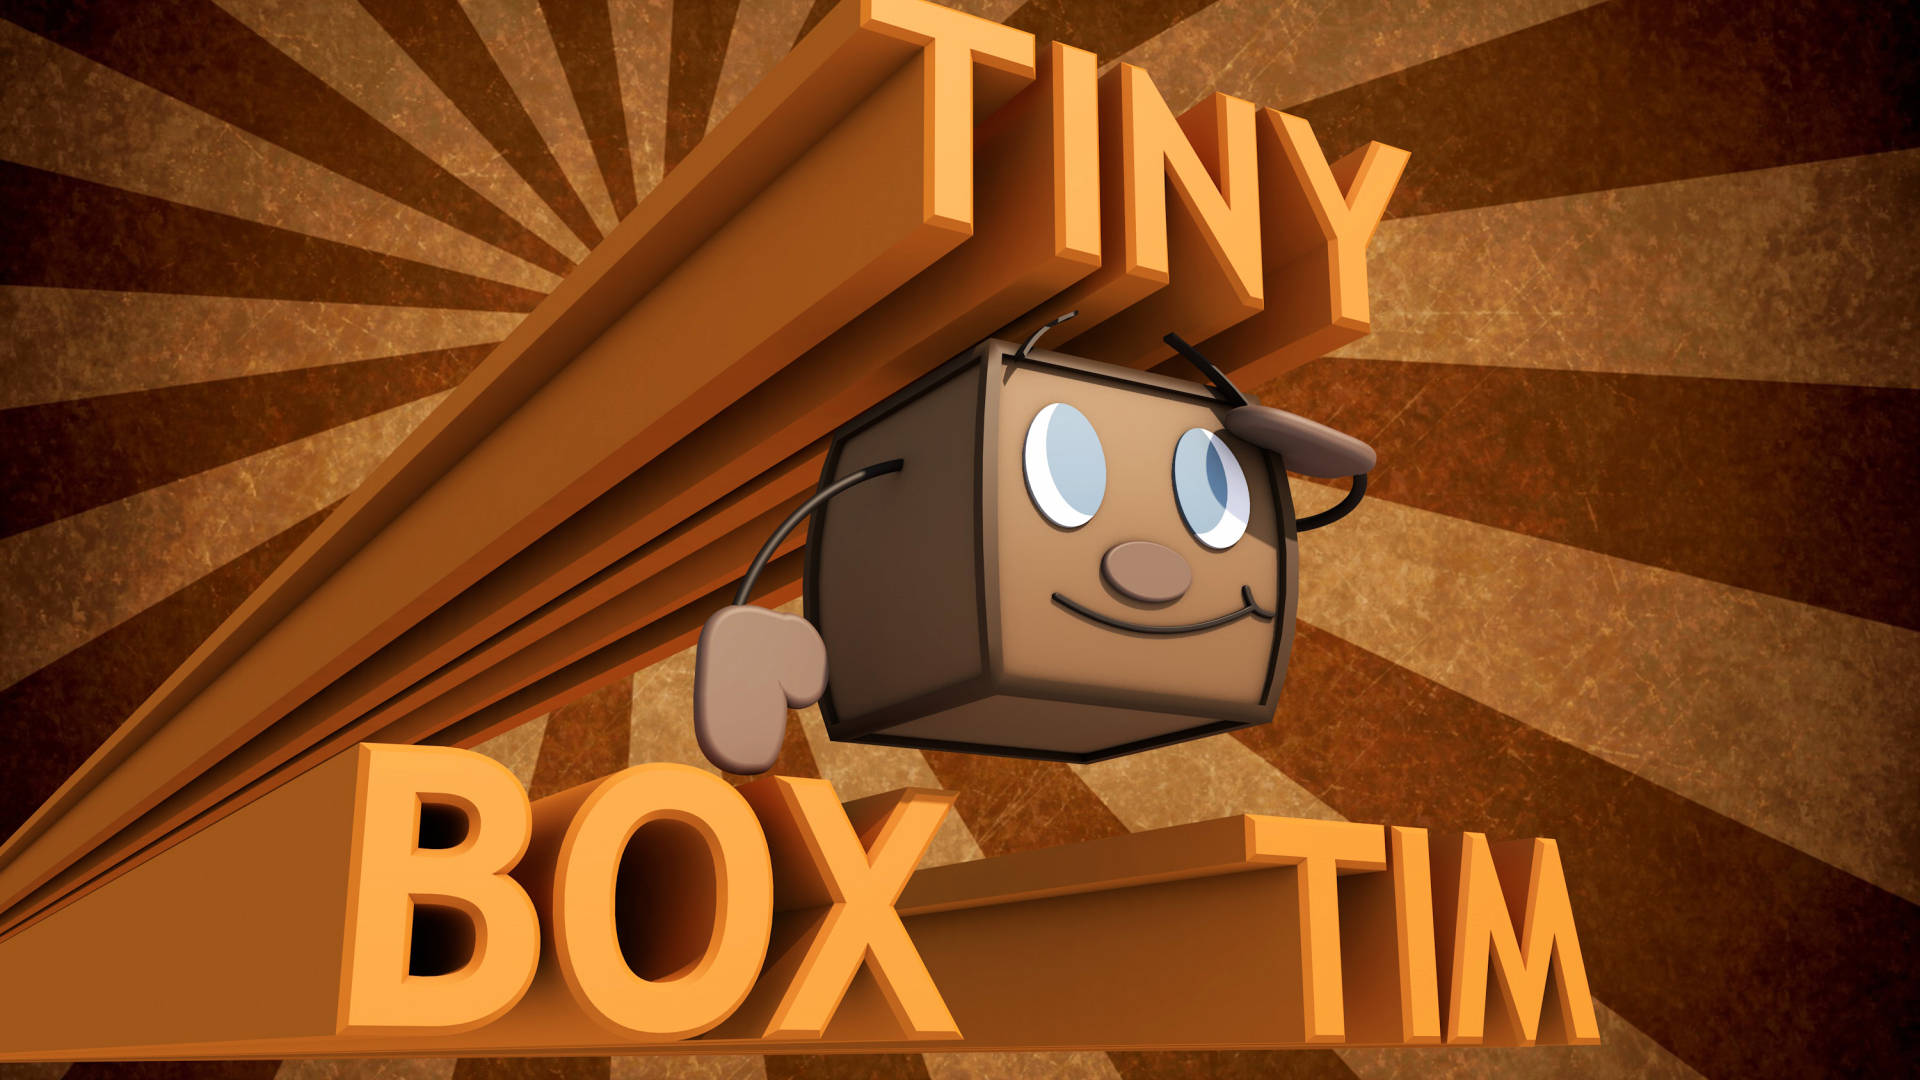 Markiplier Tiny Box Tim design. Wallpaper